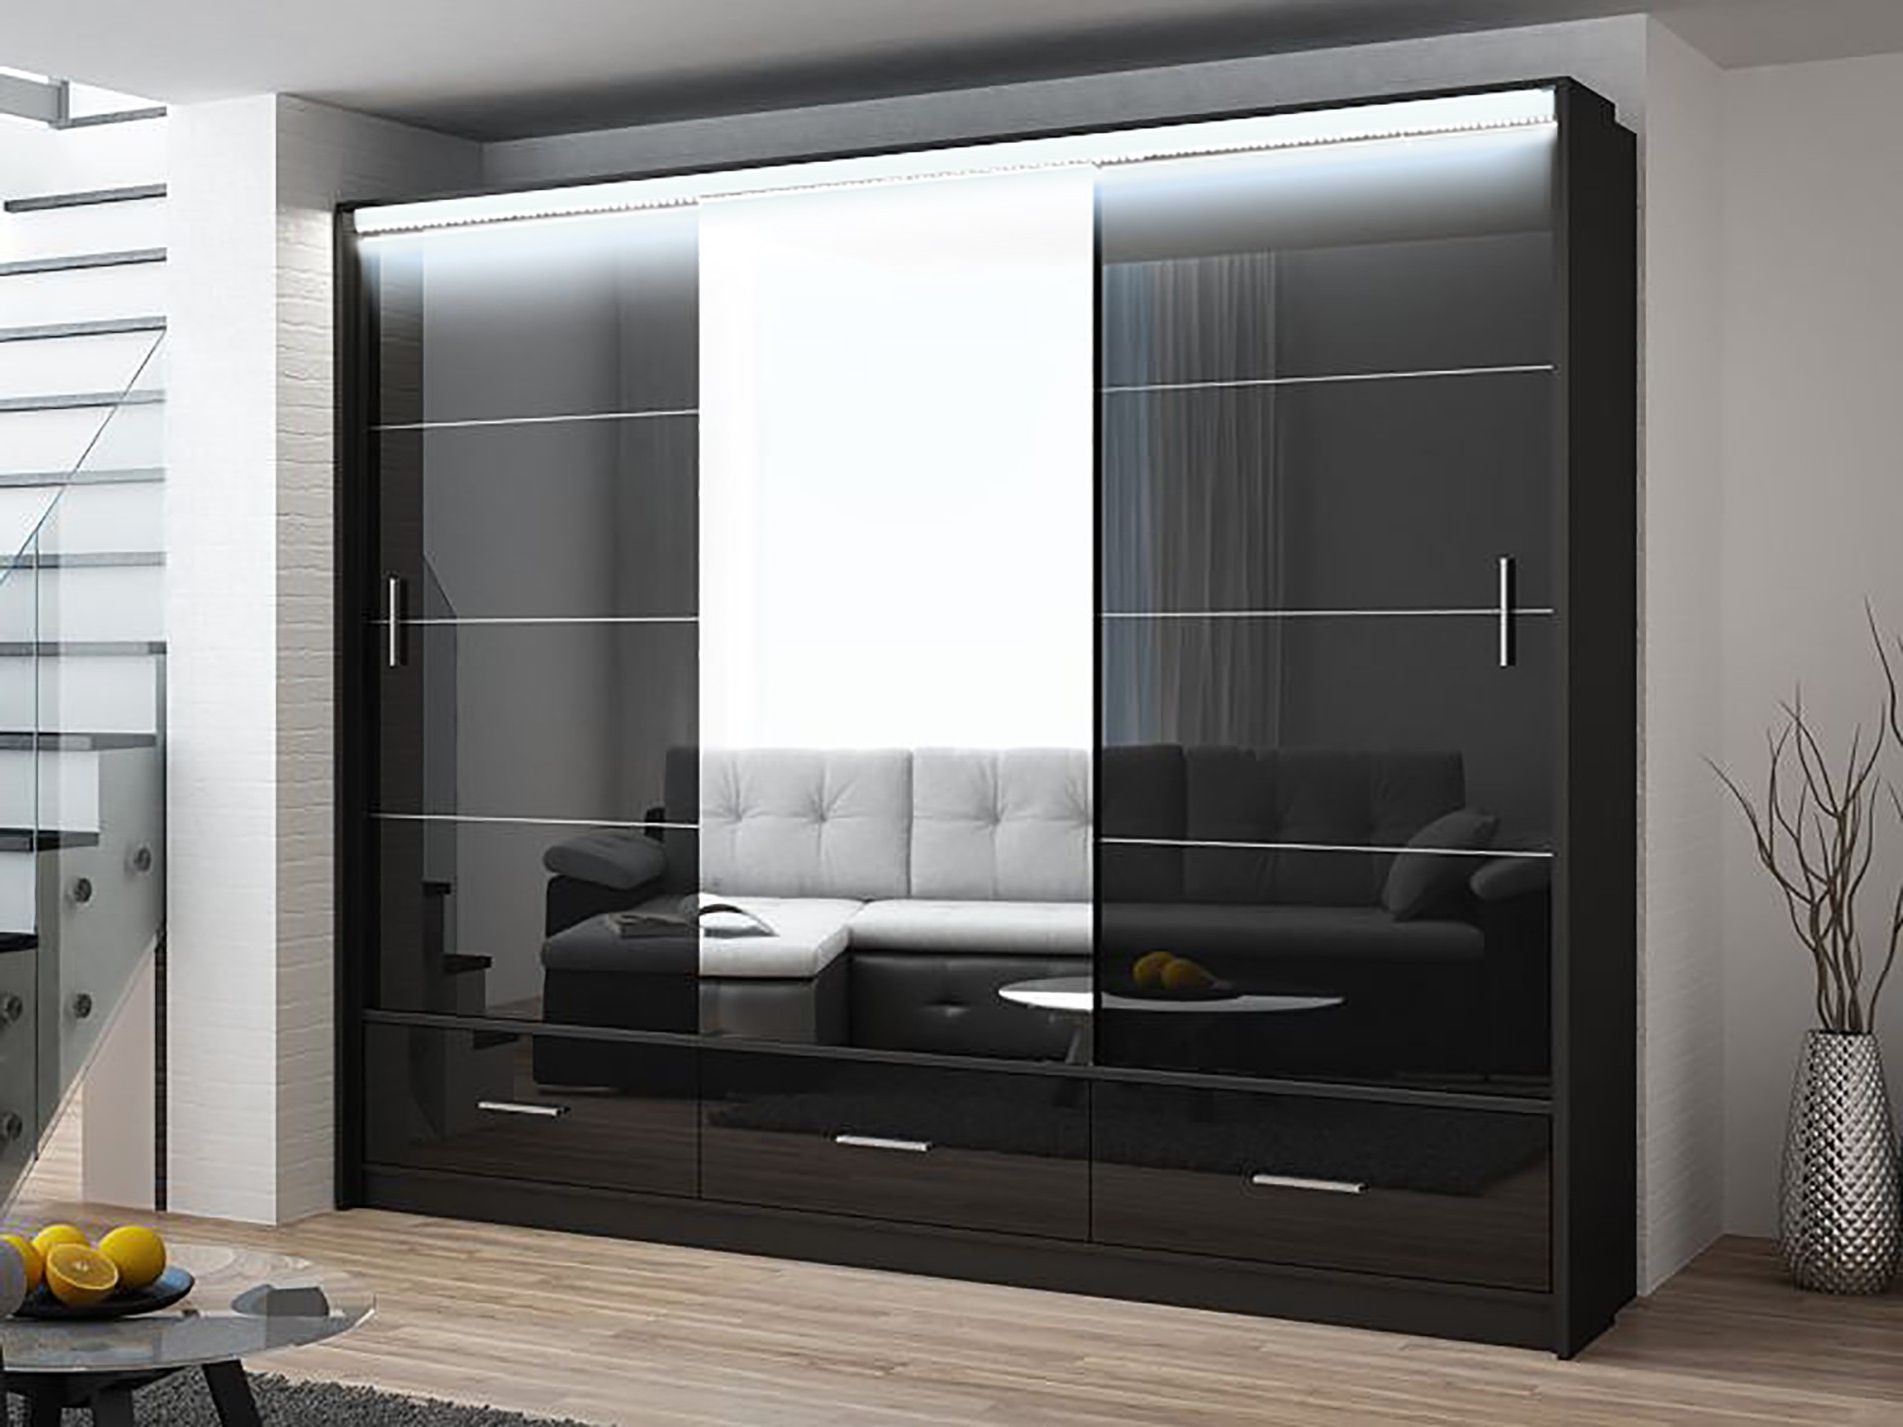 Marsylia Wardrobe, Black Gloss + Mirror 255cm ,hull Furniture Within Black Gloss Wardrobes (Gallery 3 of 20)